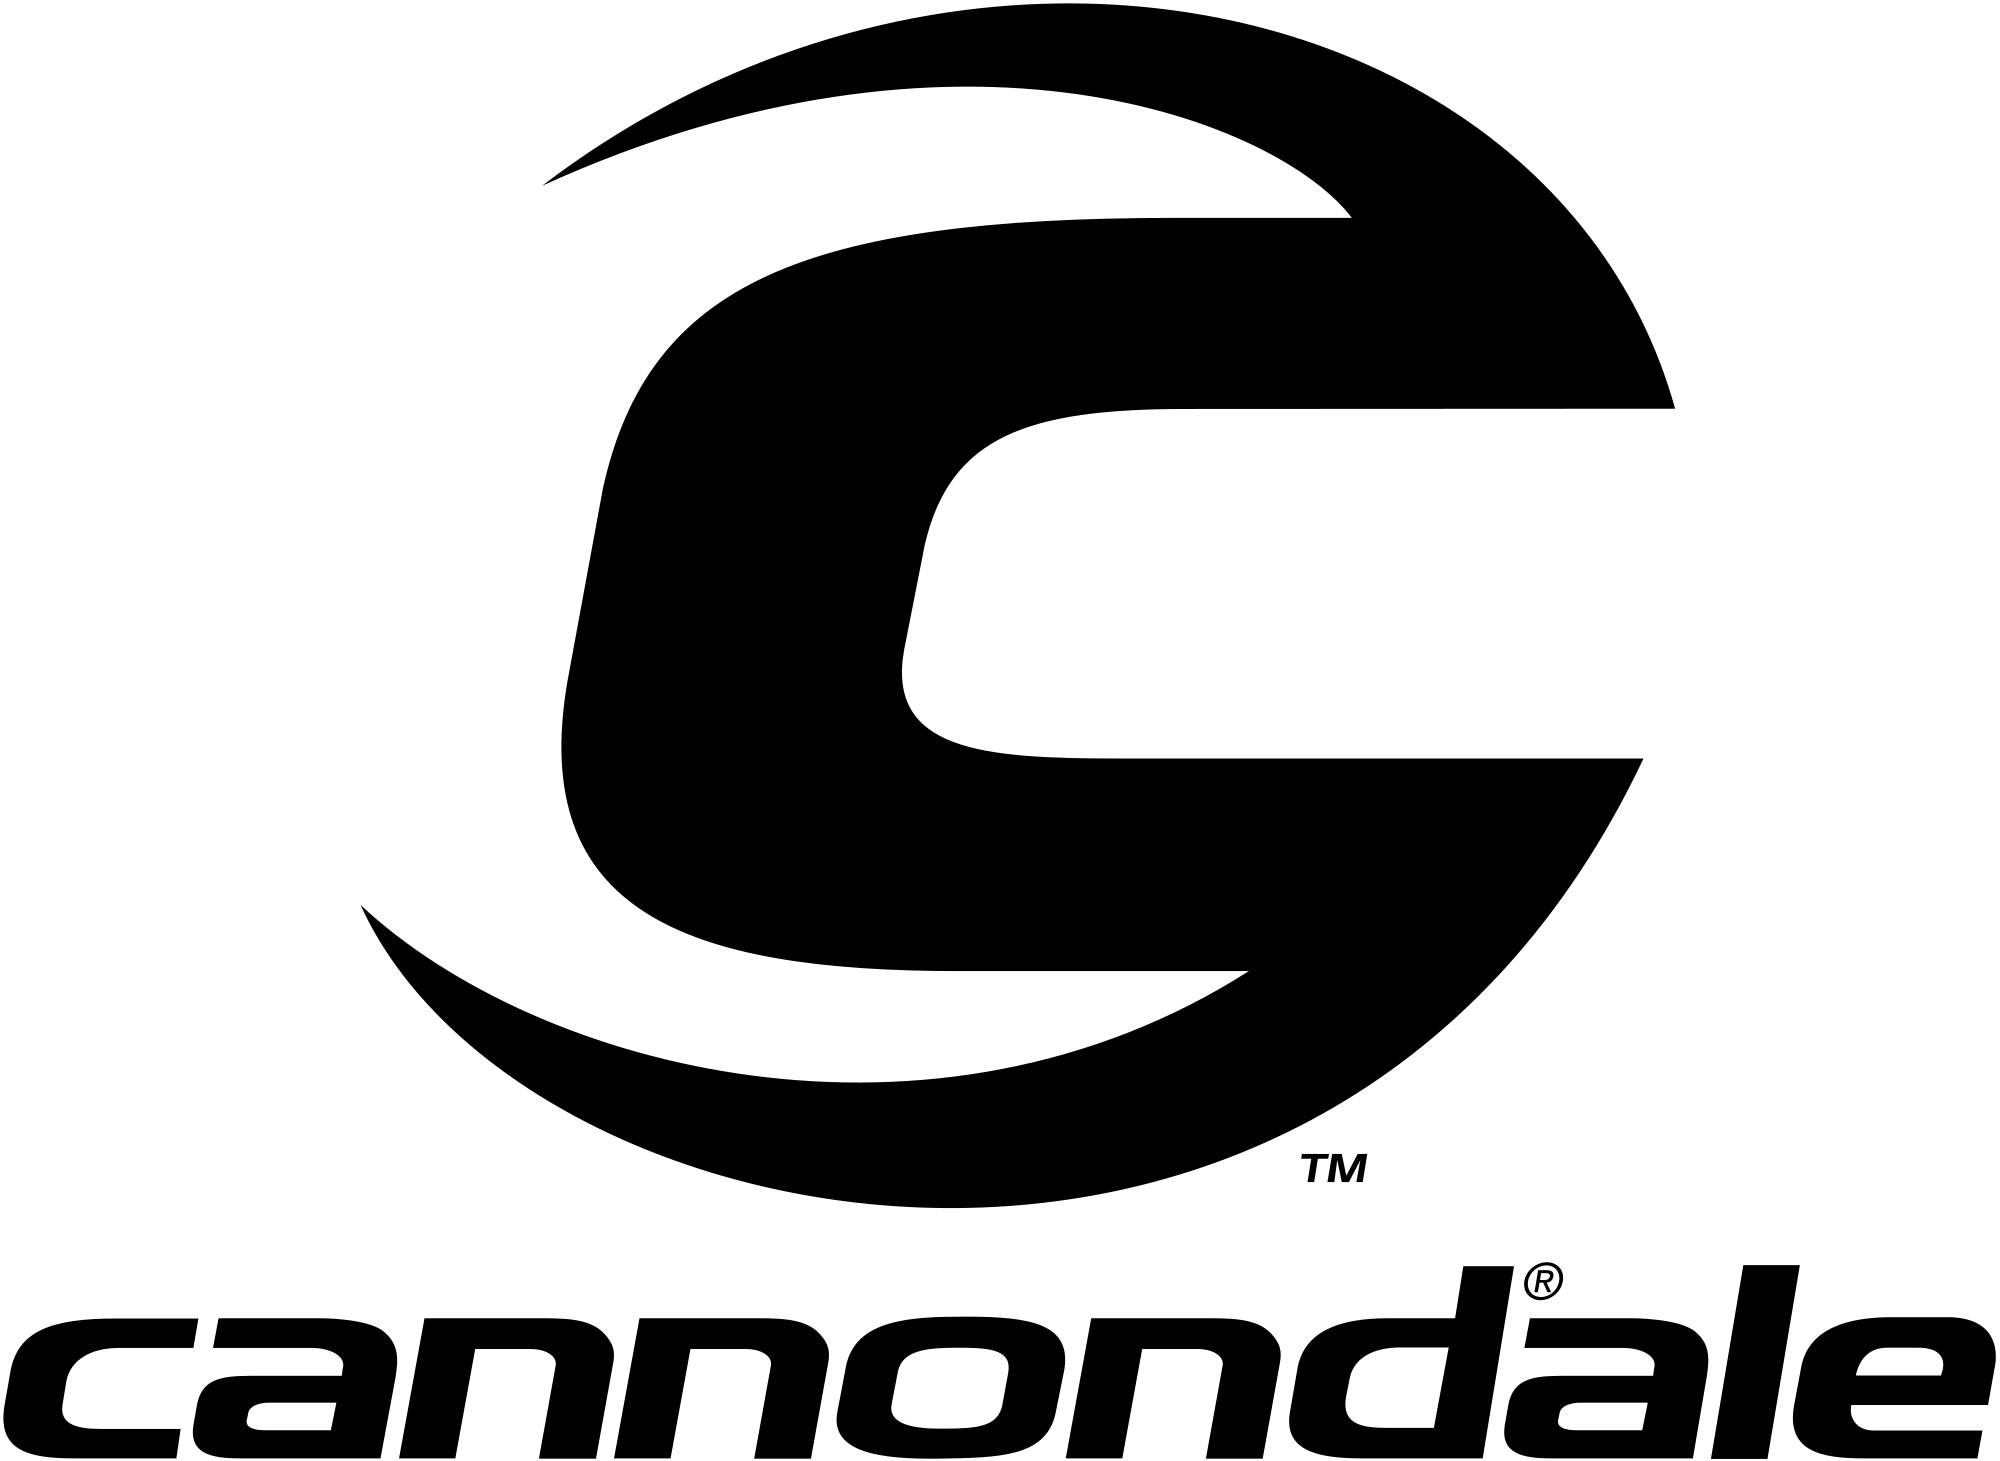 Cannondale Logo - Image - Cannondale logo.png | Mountain Biking Wiki | FANDOM powered ...